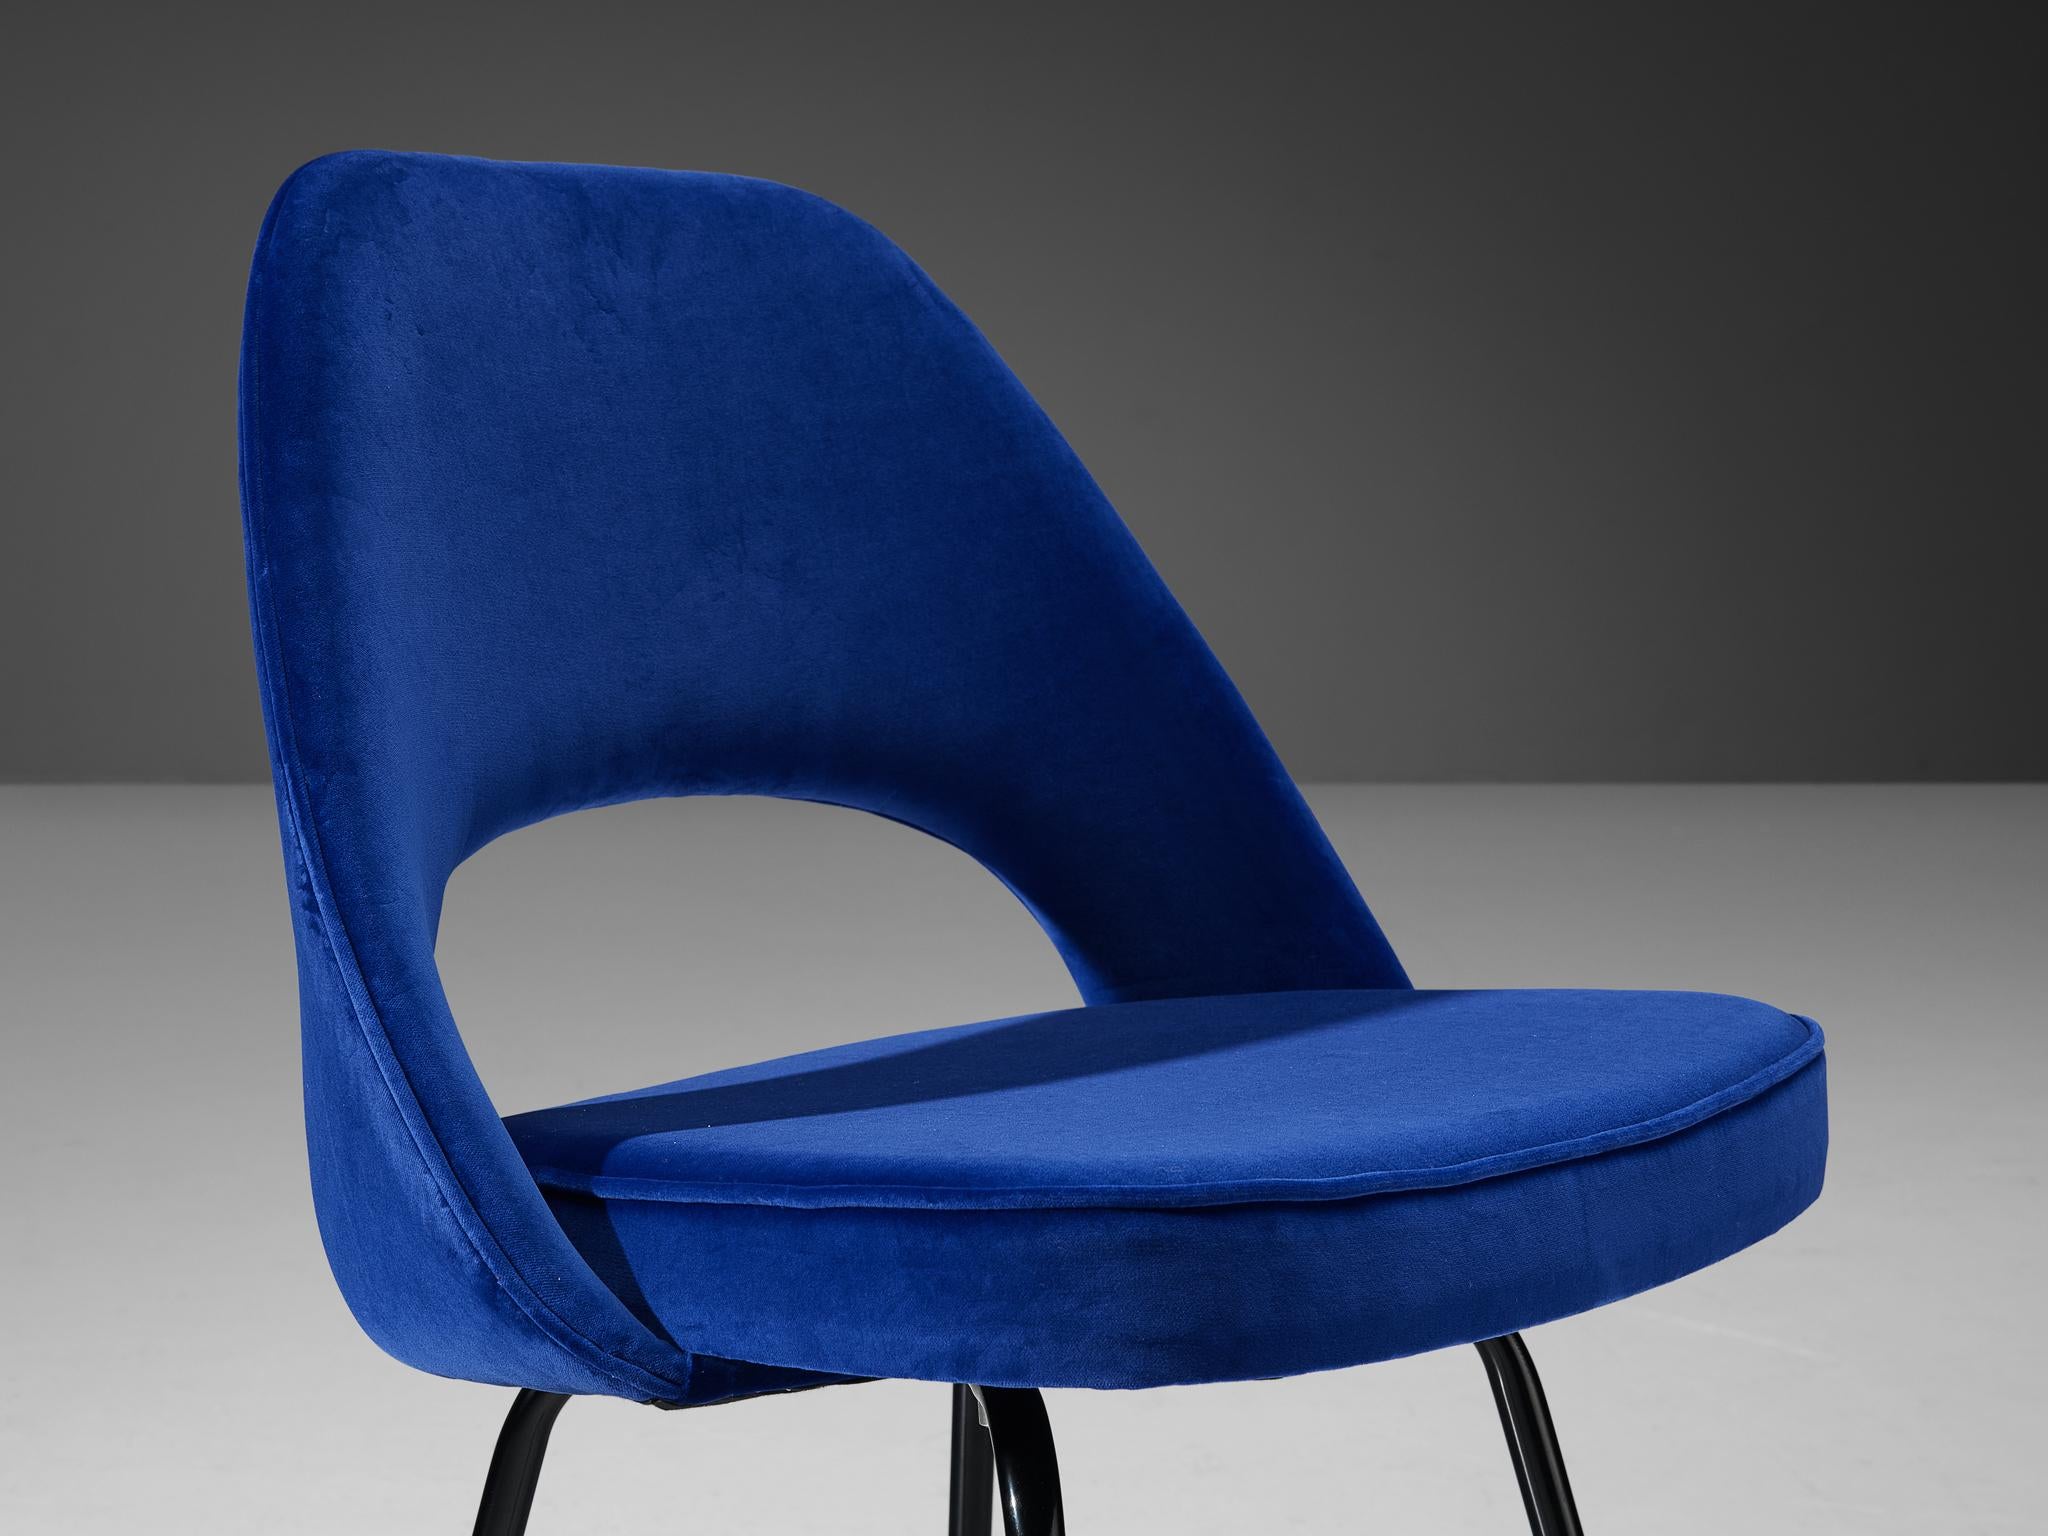 Metal Eero Saarinen for Knoll Pair of Dining Chairs in Lapis Lazuli Velvet Upholstery